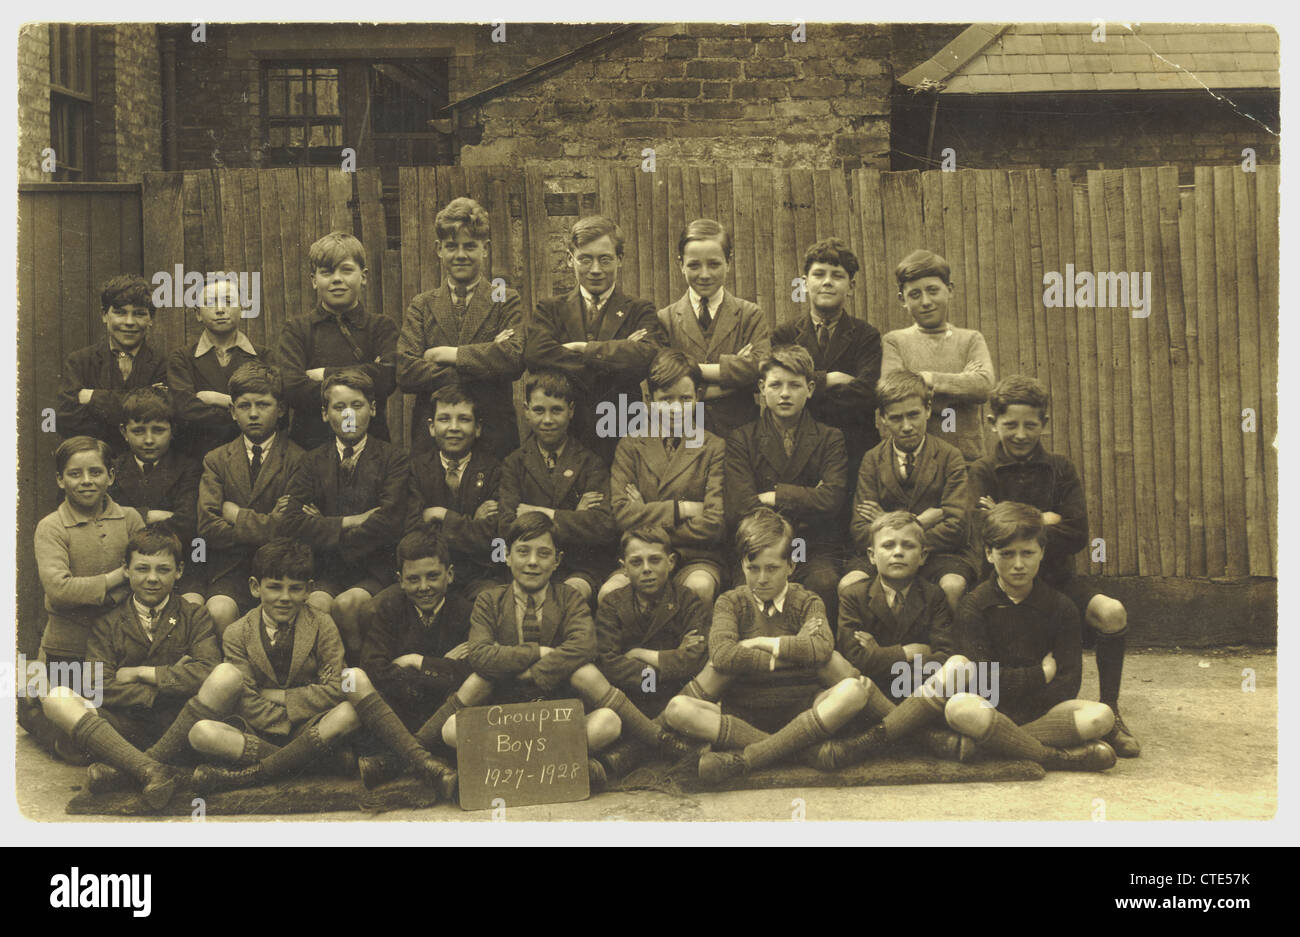 Boys' school photograph - class of group 1V boys dated 1927-1928, U.K. Stock Photo